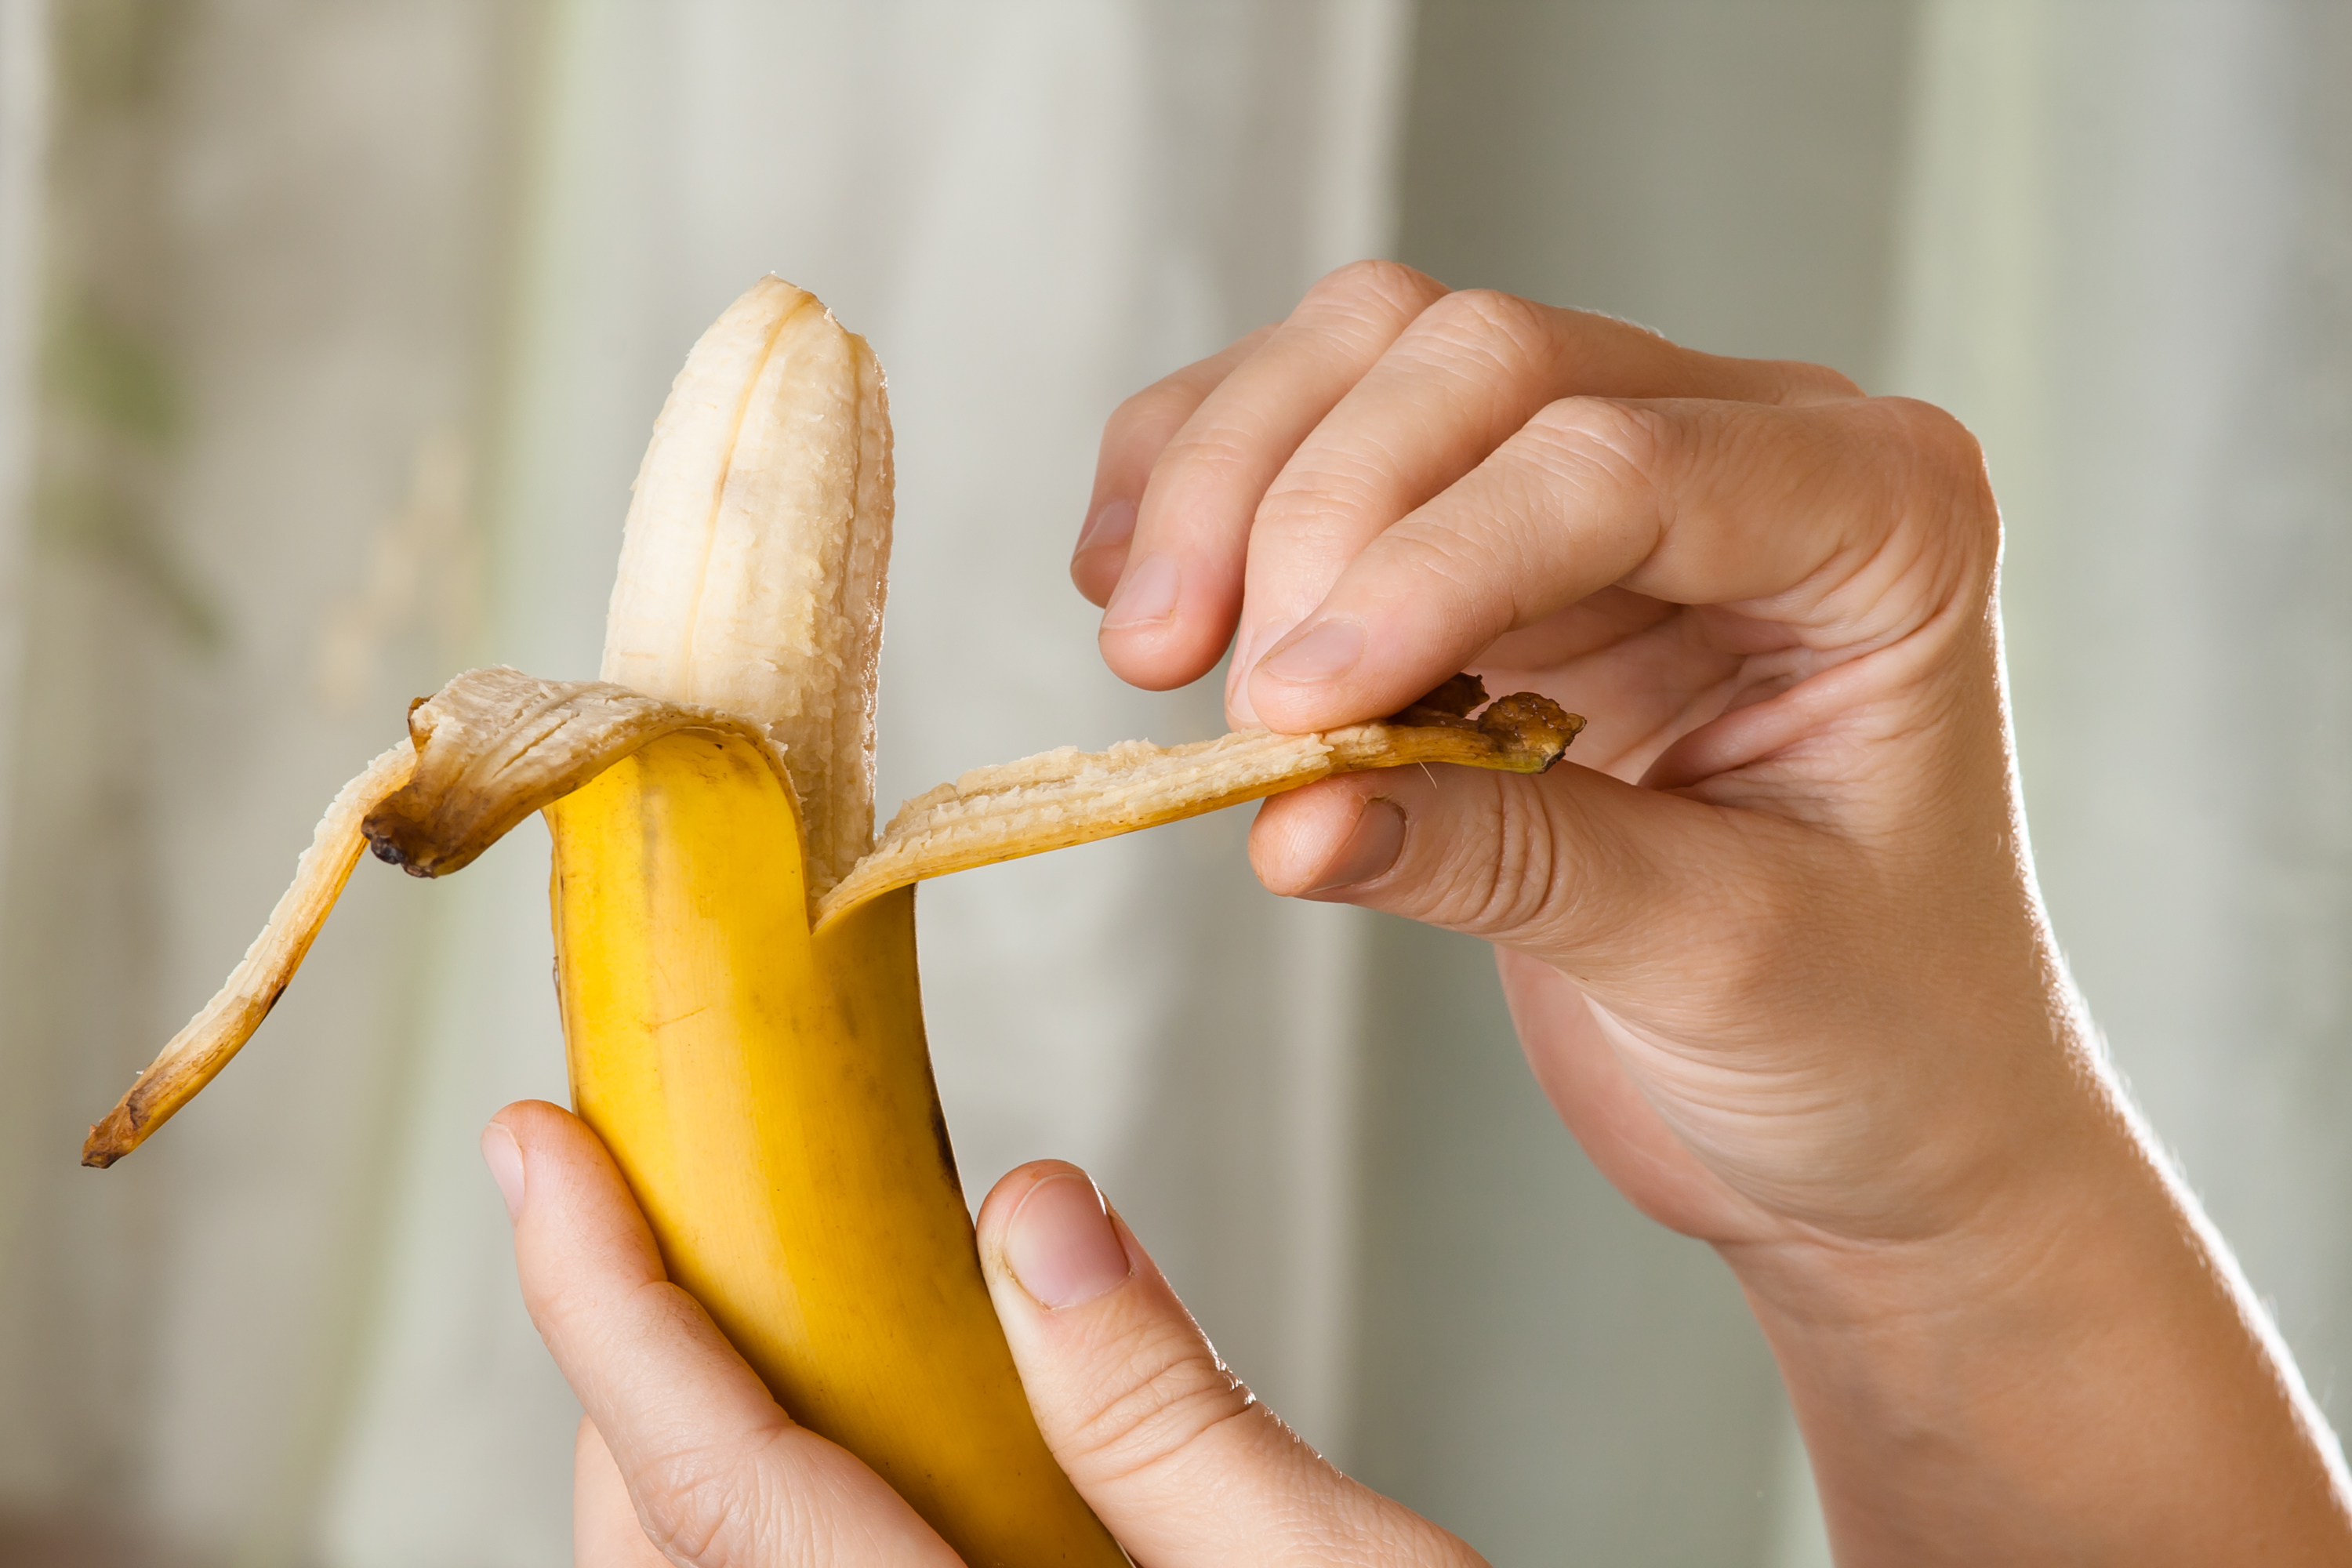 peeling bananas